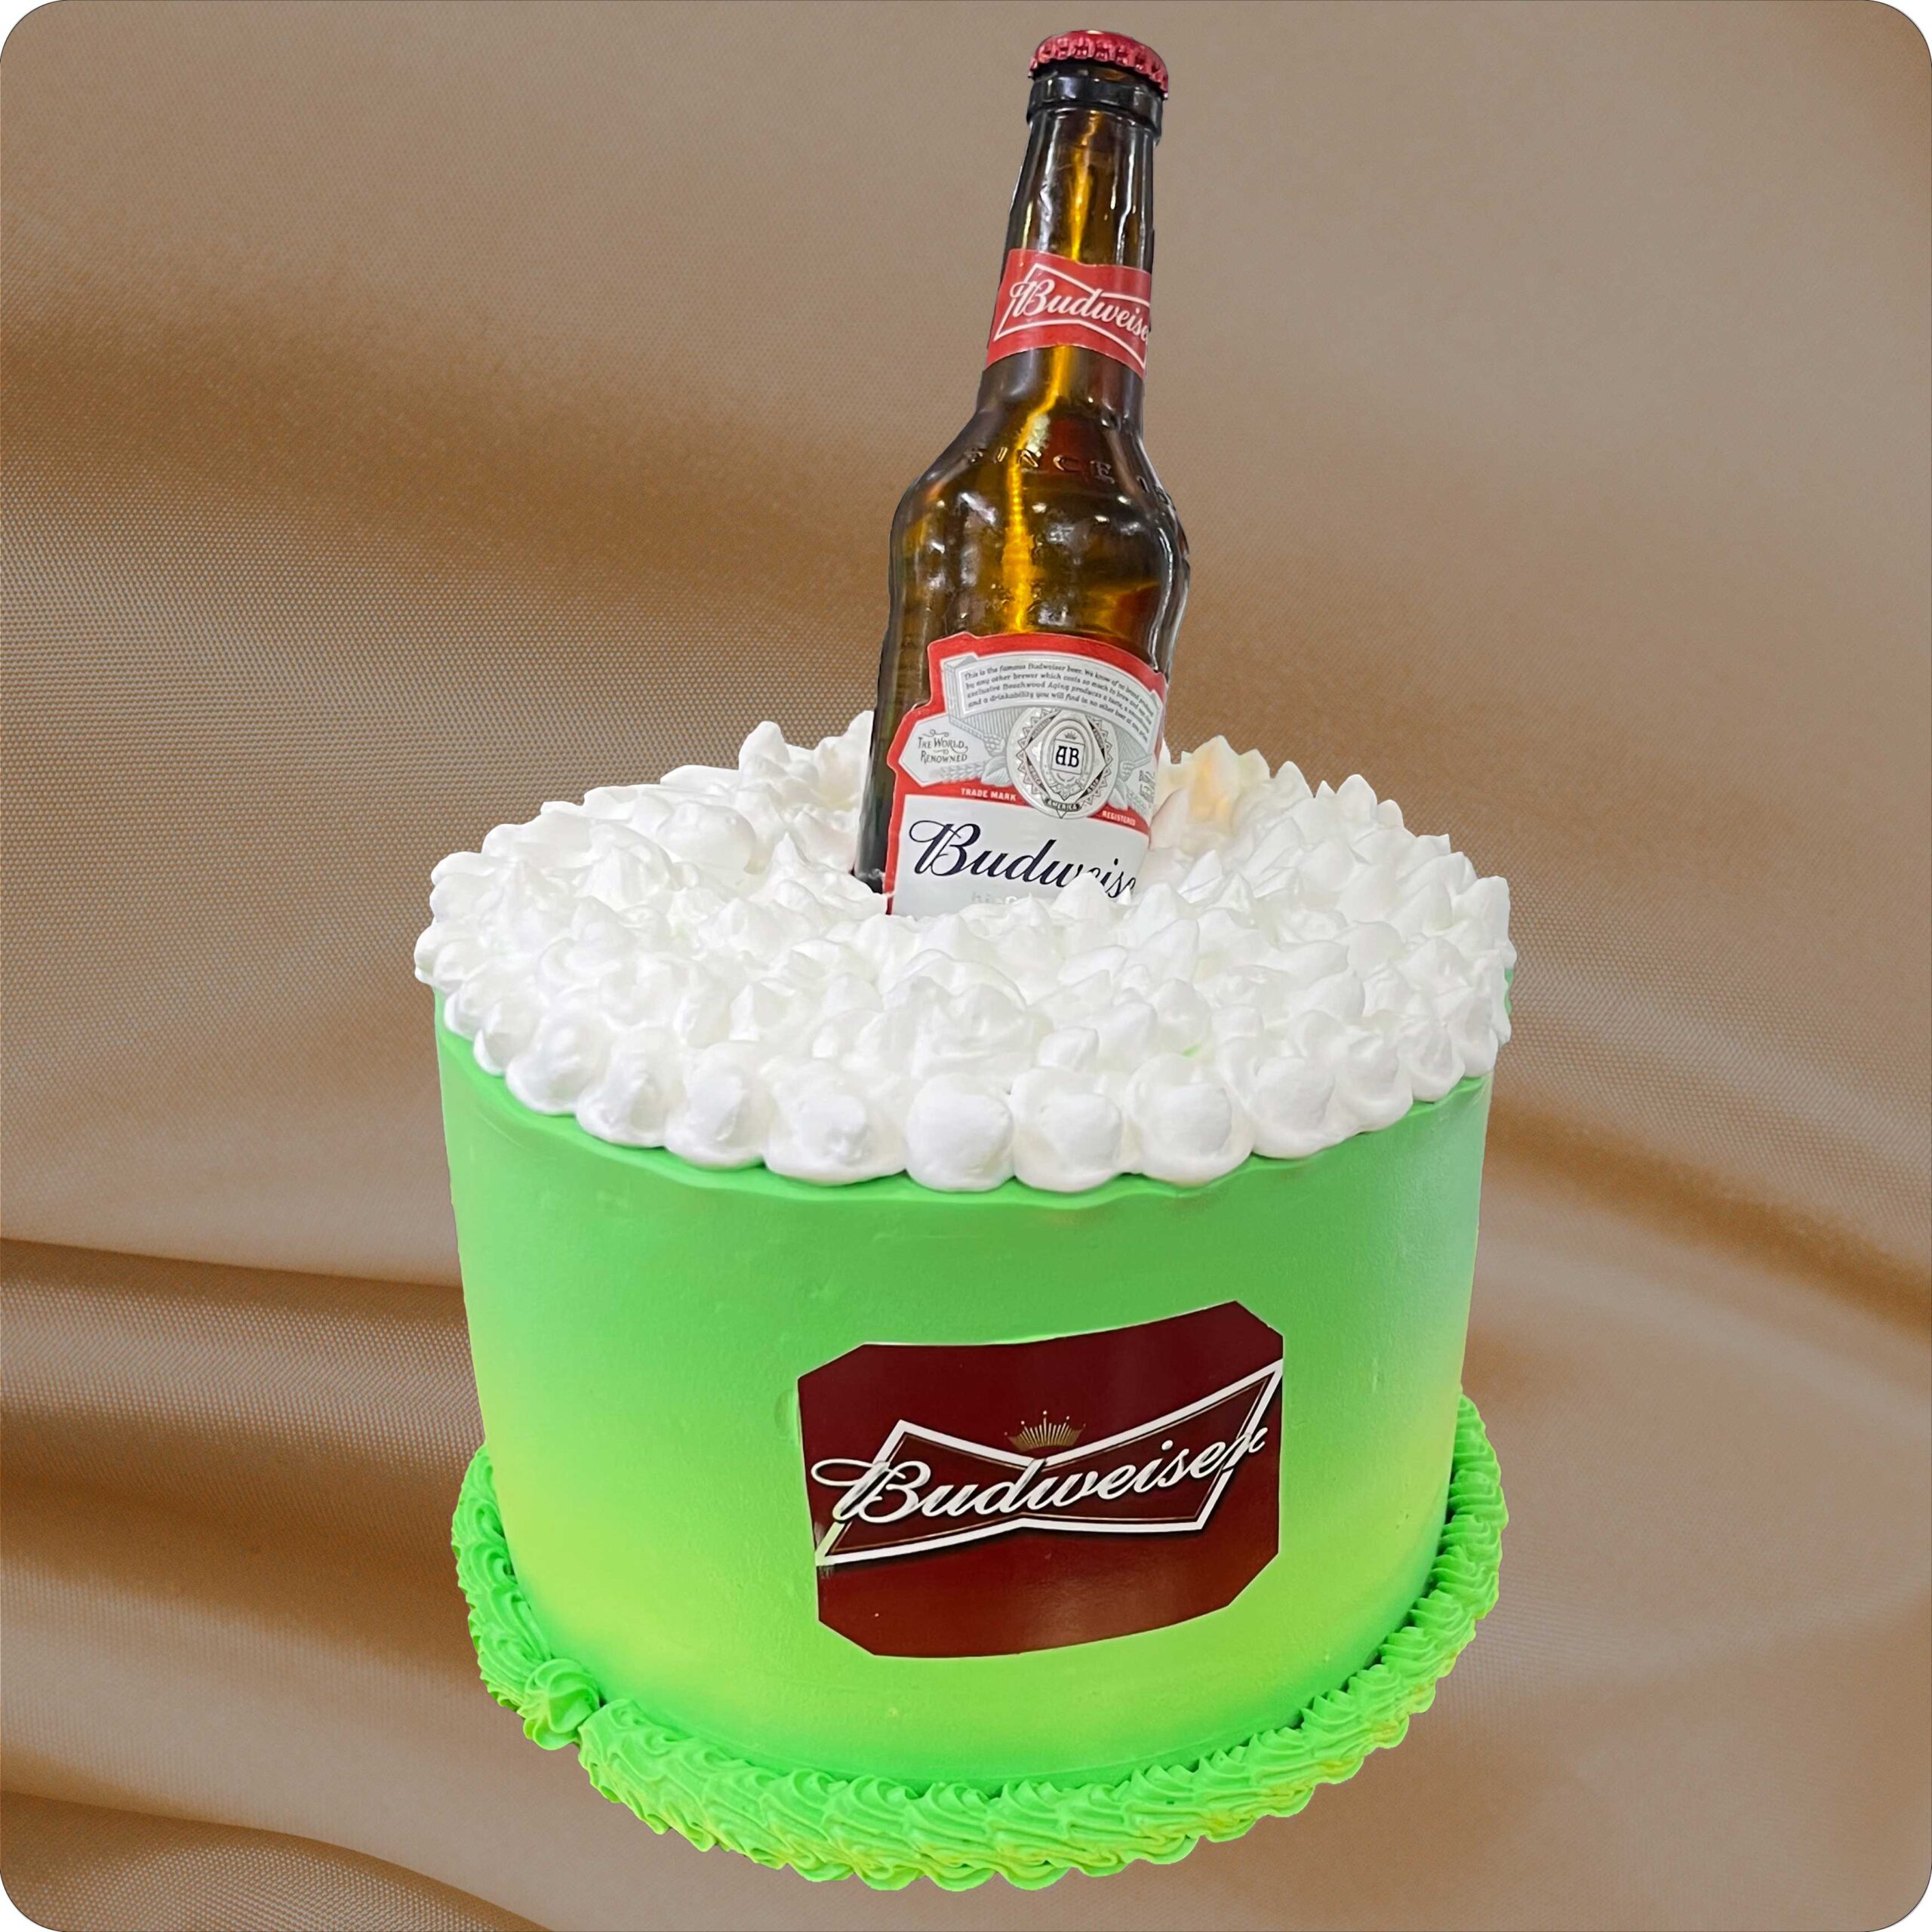 Budweiser - Decorated Cake by kerrycakesnewcastle - CakesDecor